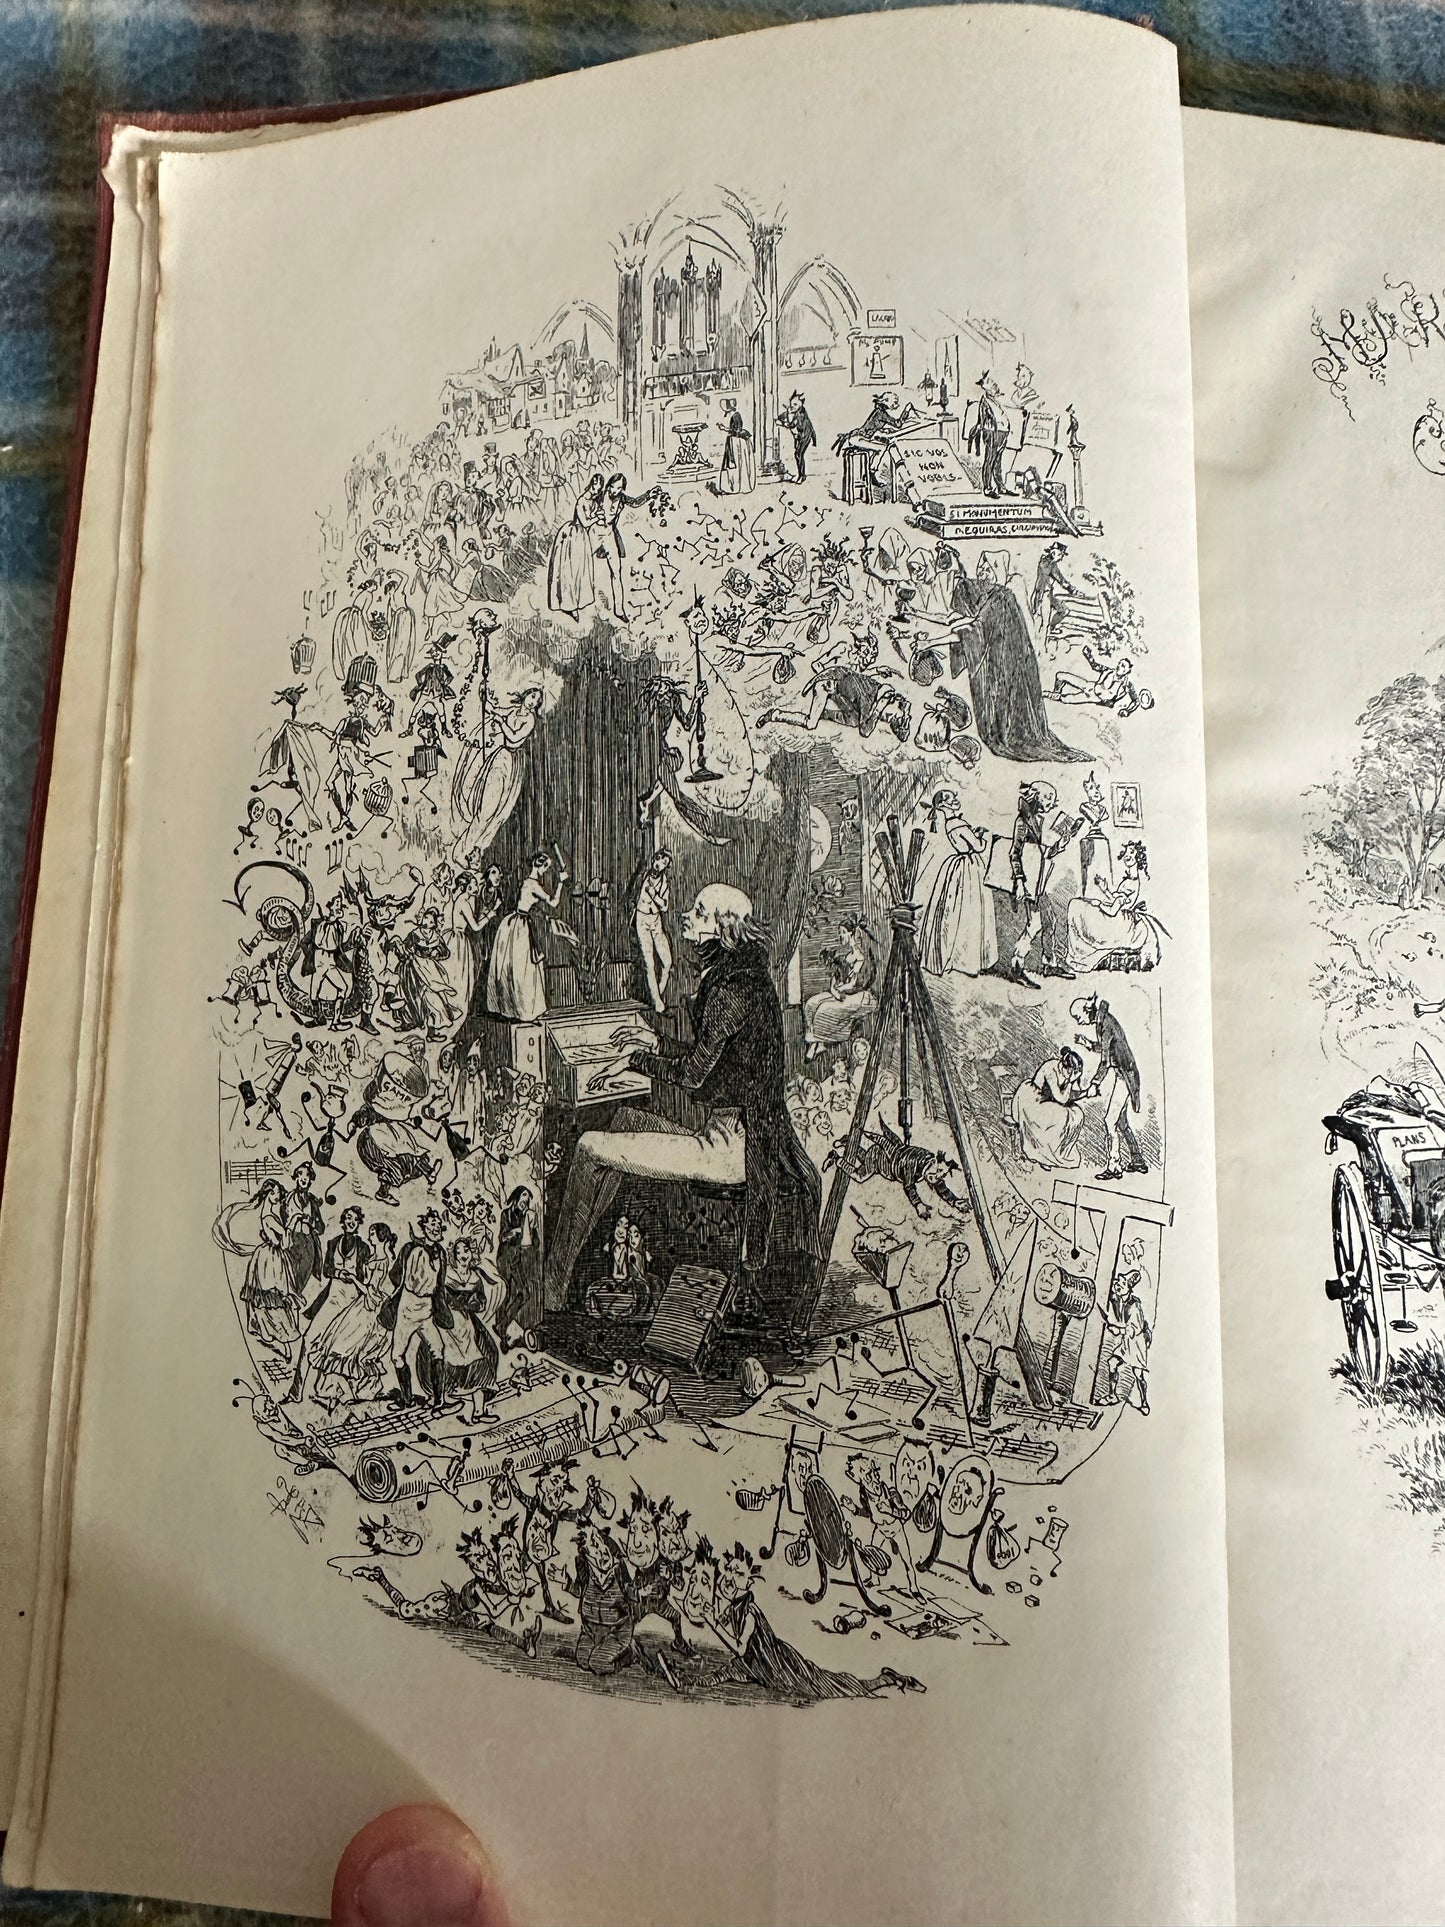 1913 Martin Chuzzlewit - Charles Dickens(Phiz illustration) Chapman & Hall